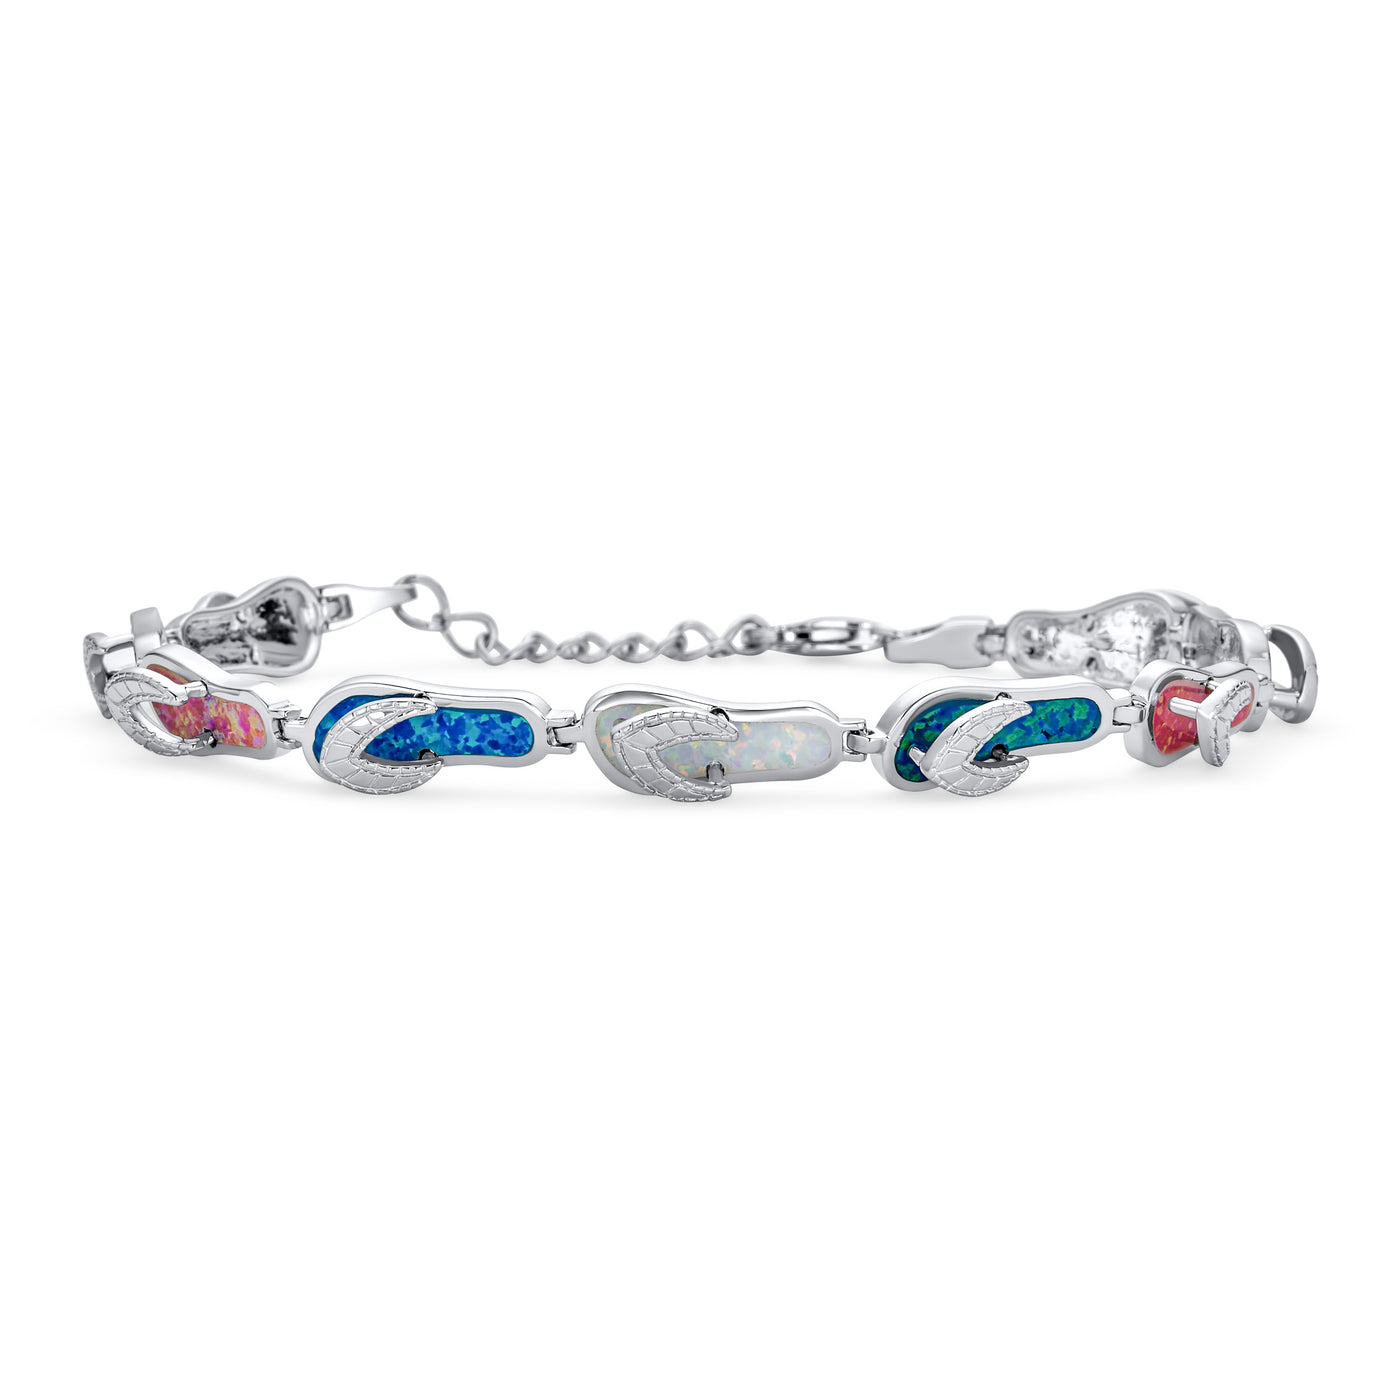 Tropical Vacation Flip Flop al Created Opal Bracelet Sterling Silver